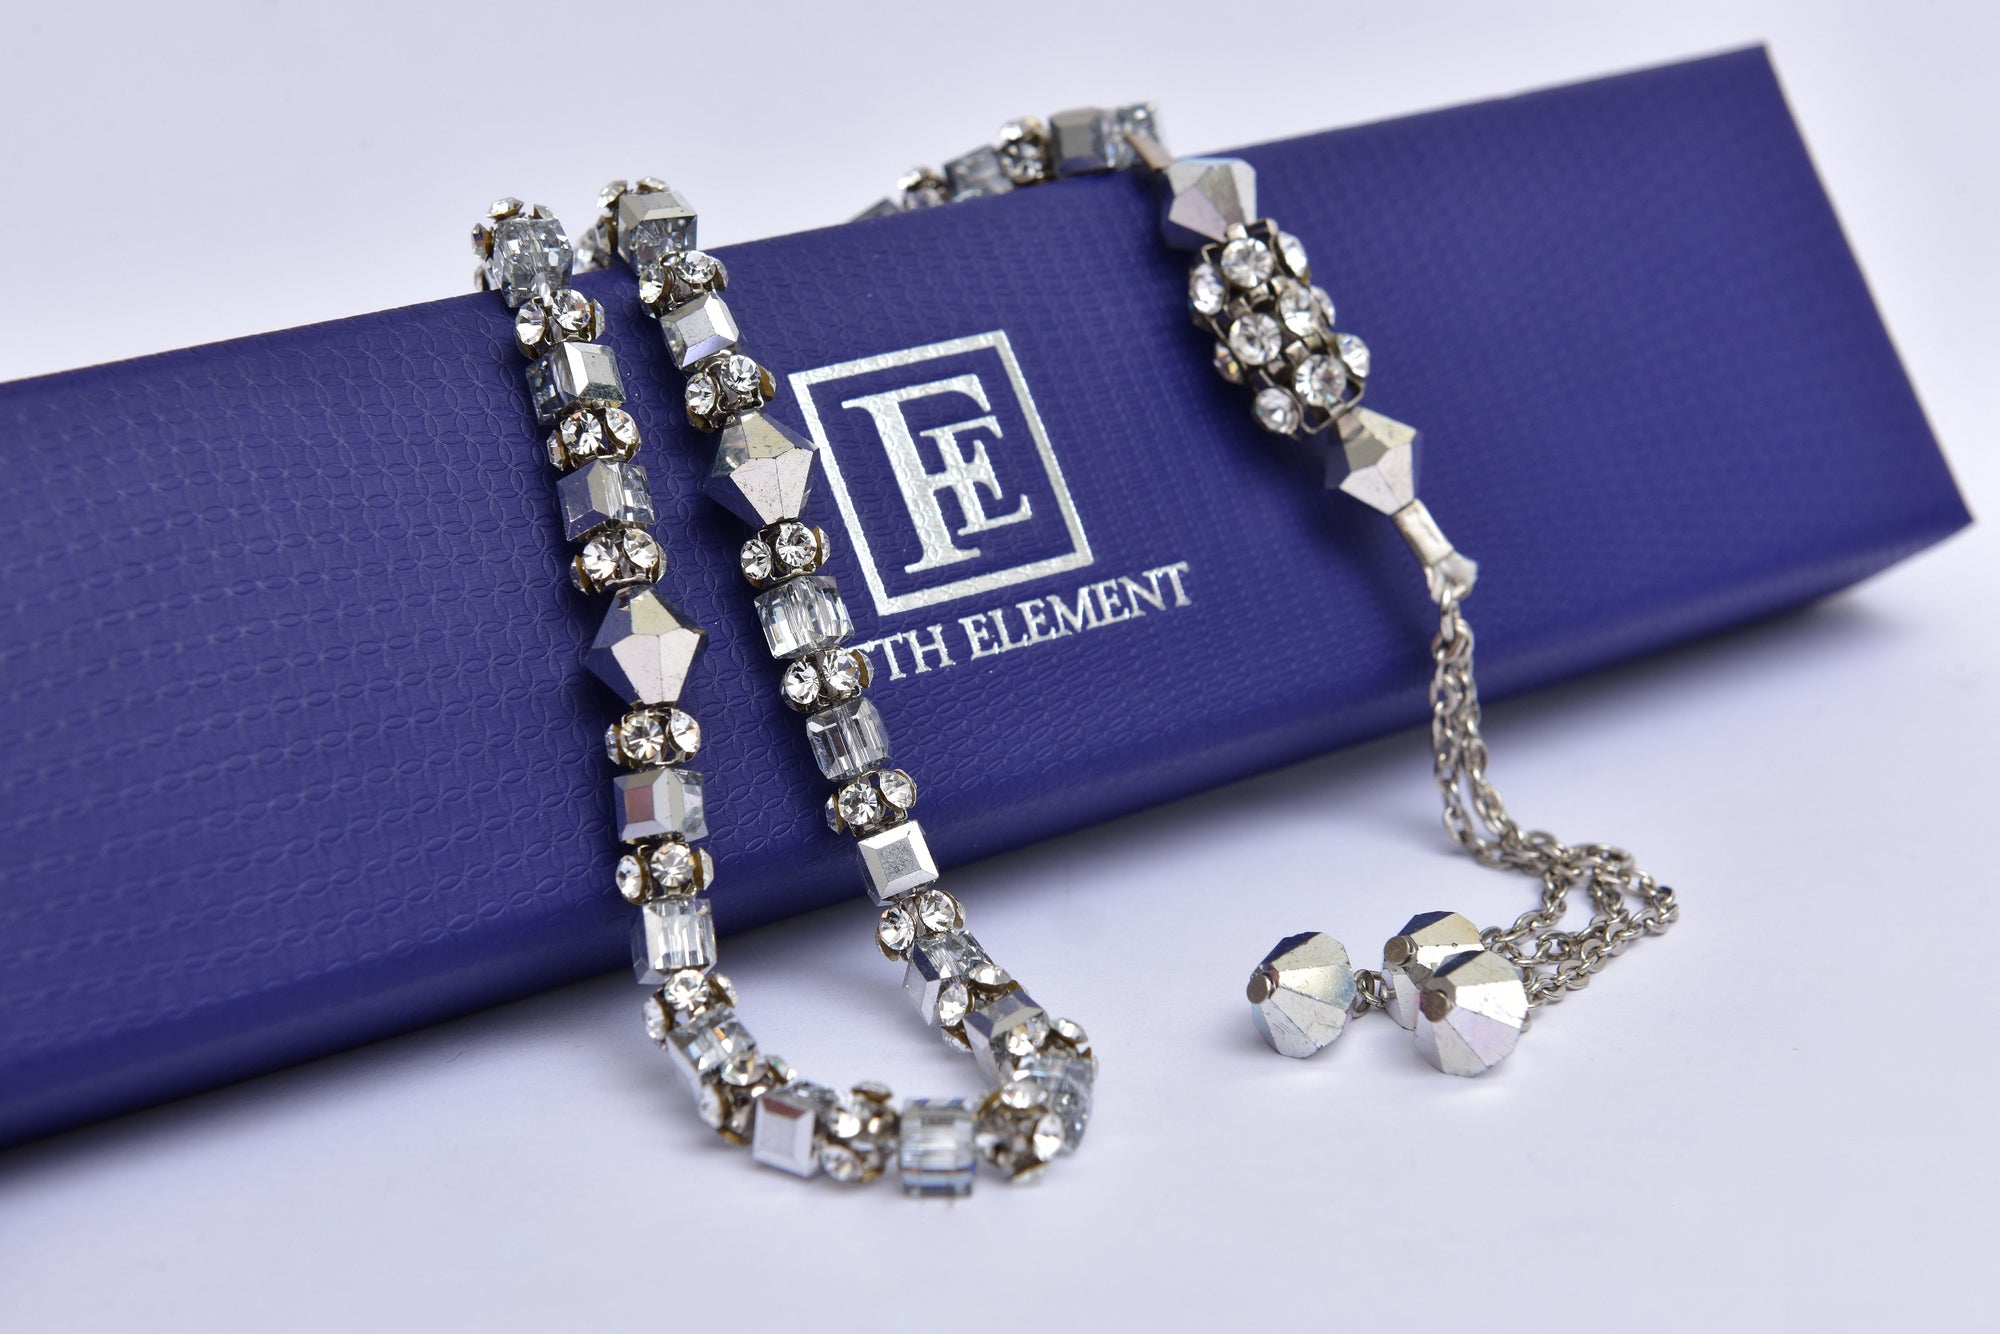 Islamic White Tasbih (Rosary) 33 Beads with Metallic Grey Divider, Eid Ramadan Religious Gift